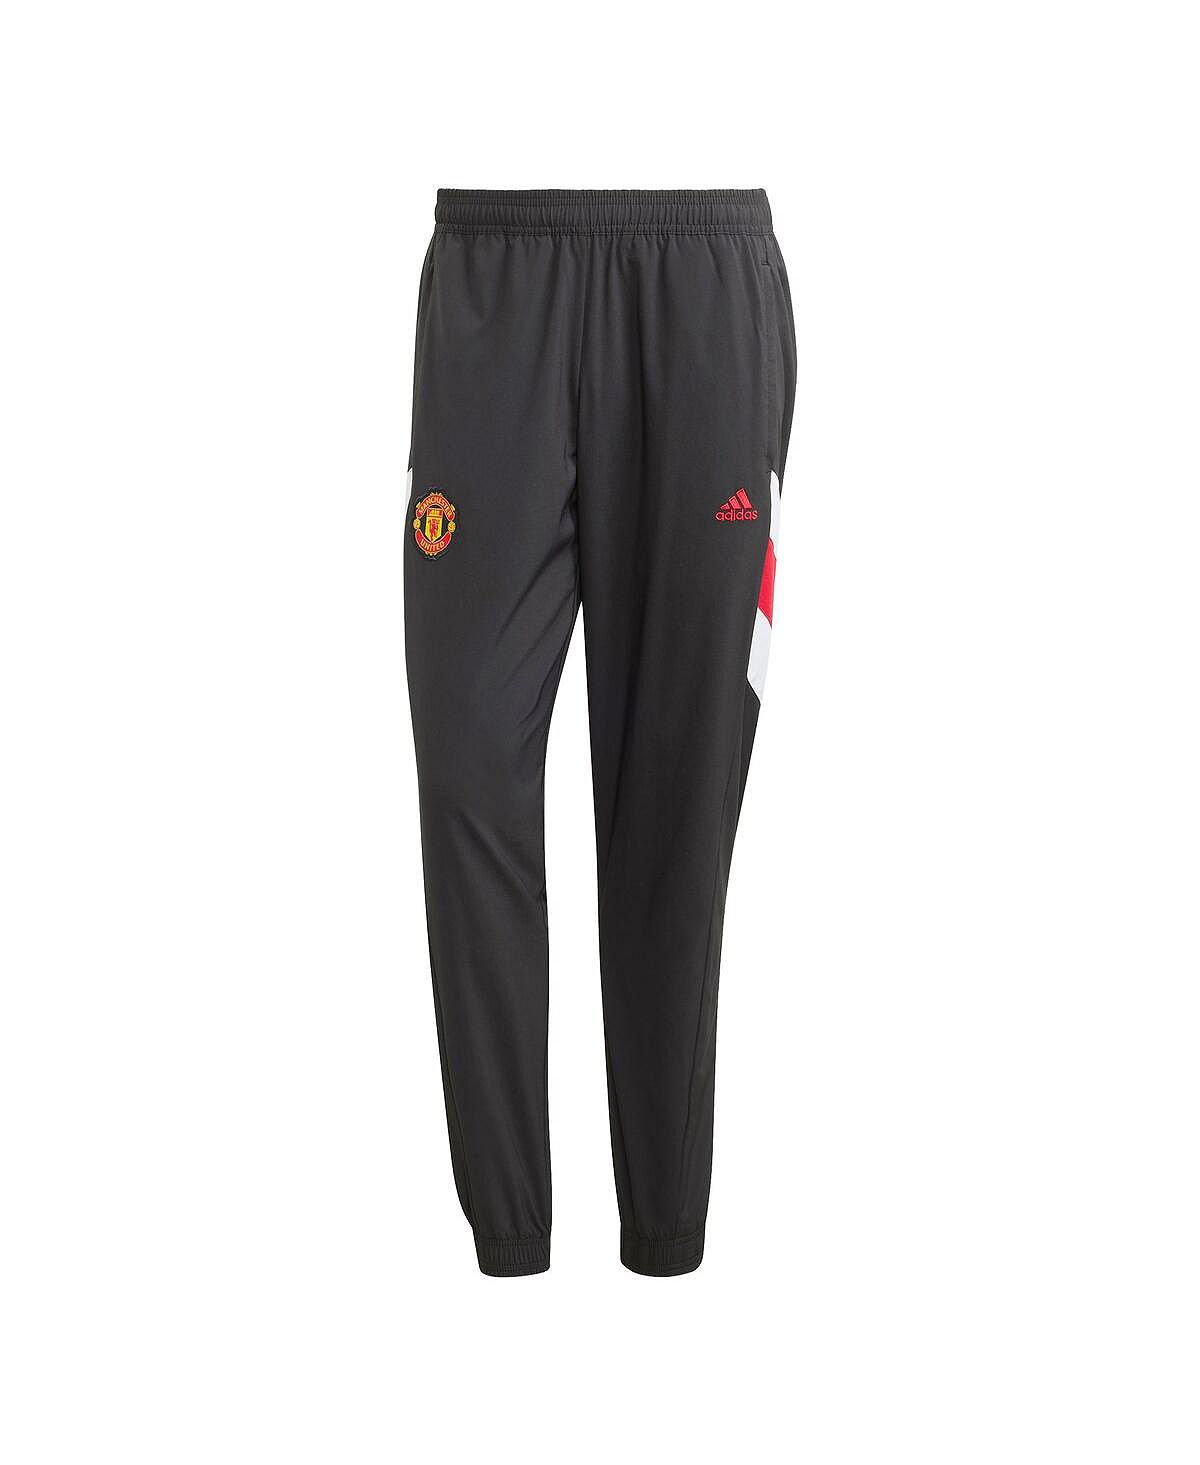 Мужские черные тренировочные брюки Manchester United Football Icon adidas 2021 2022 new manchester football jersey top quality fast send united aldult kids kit